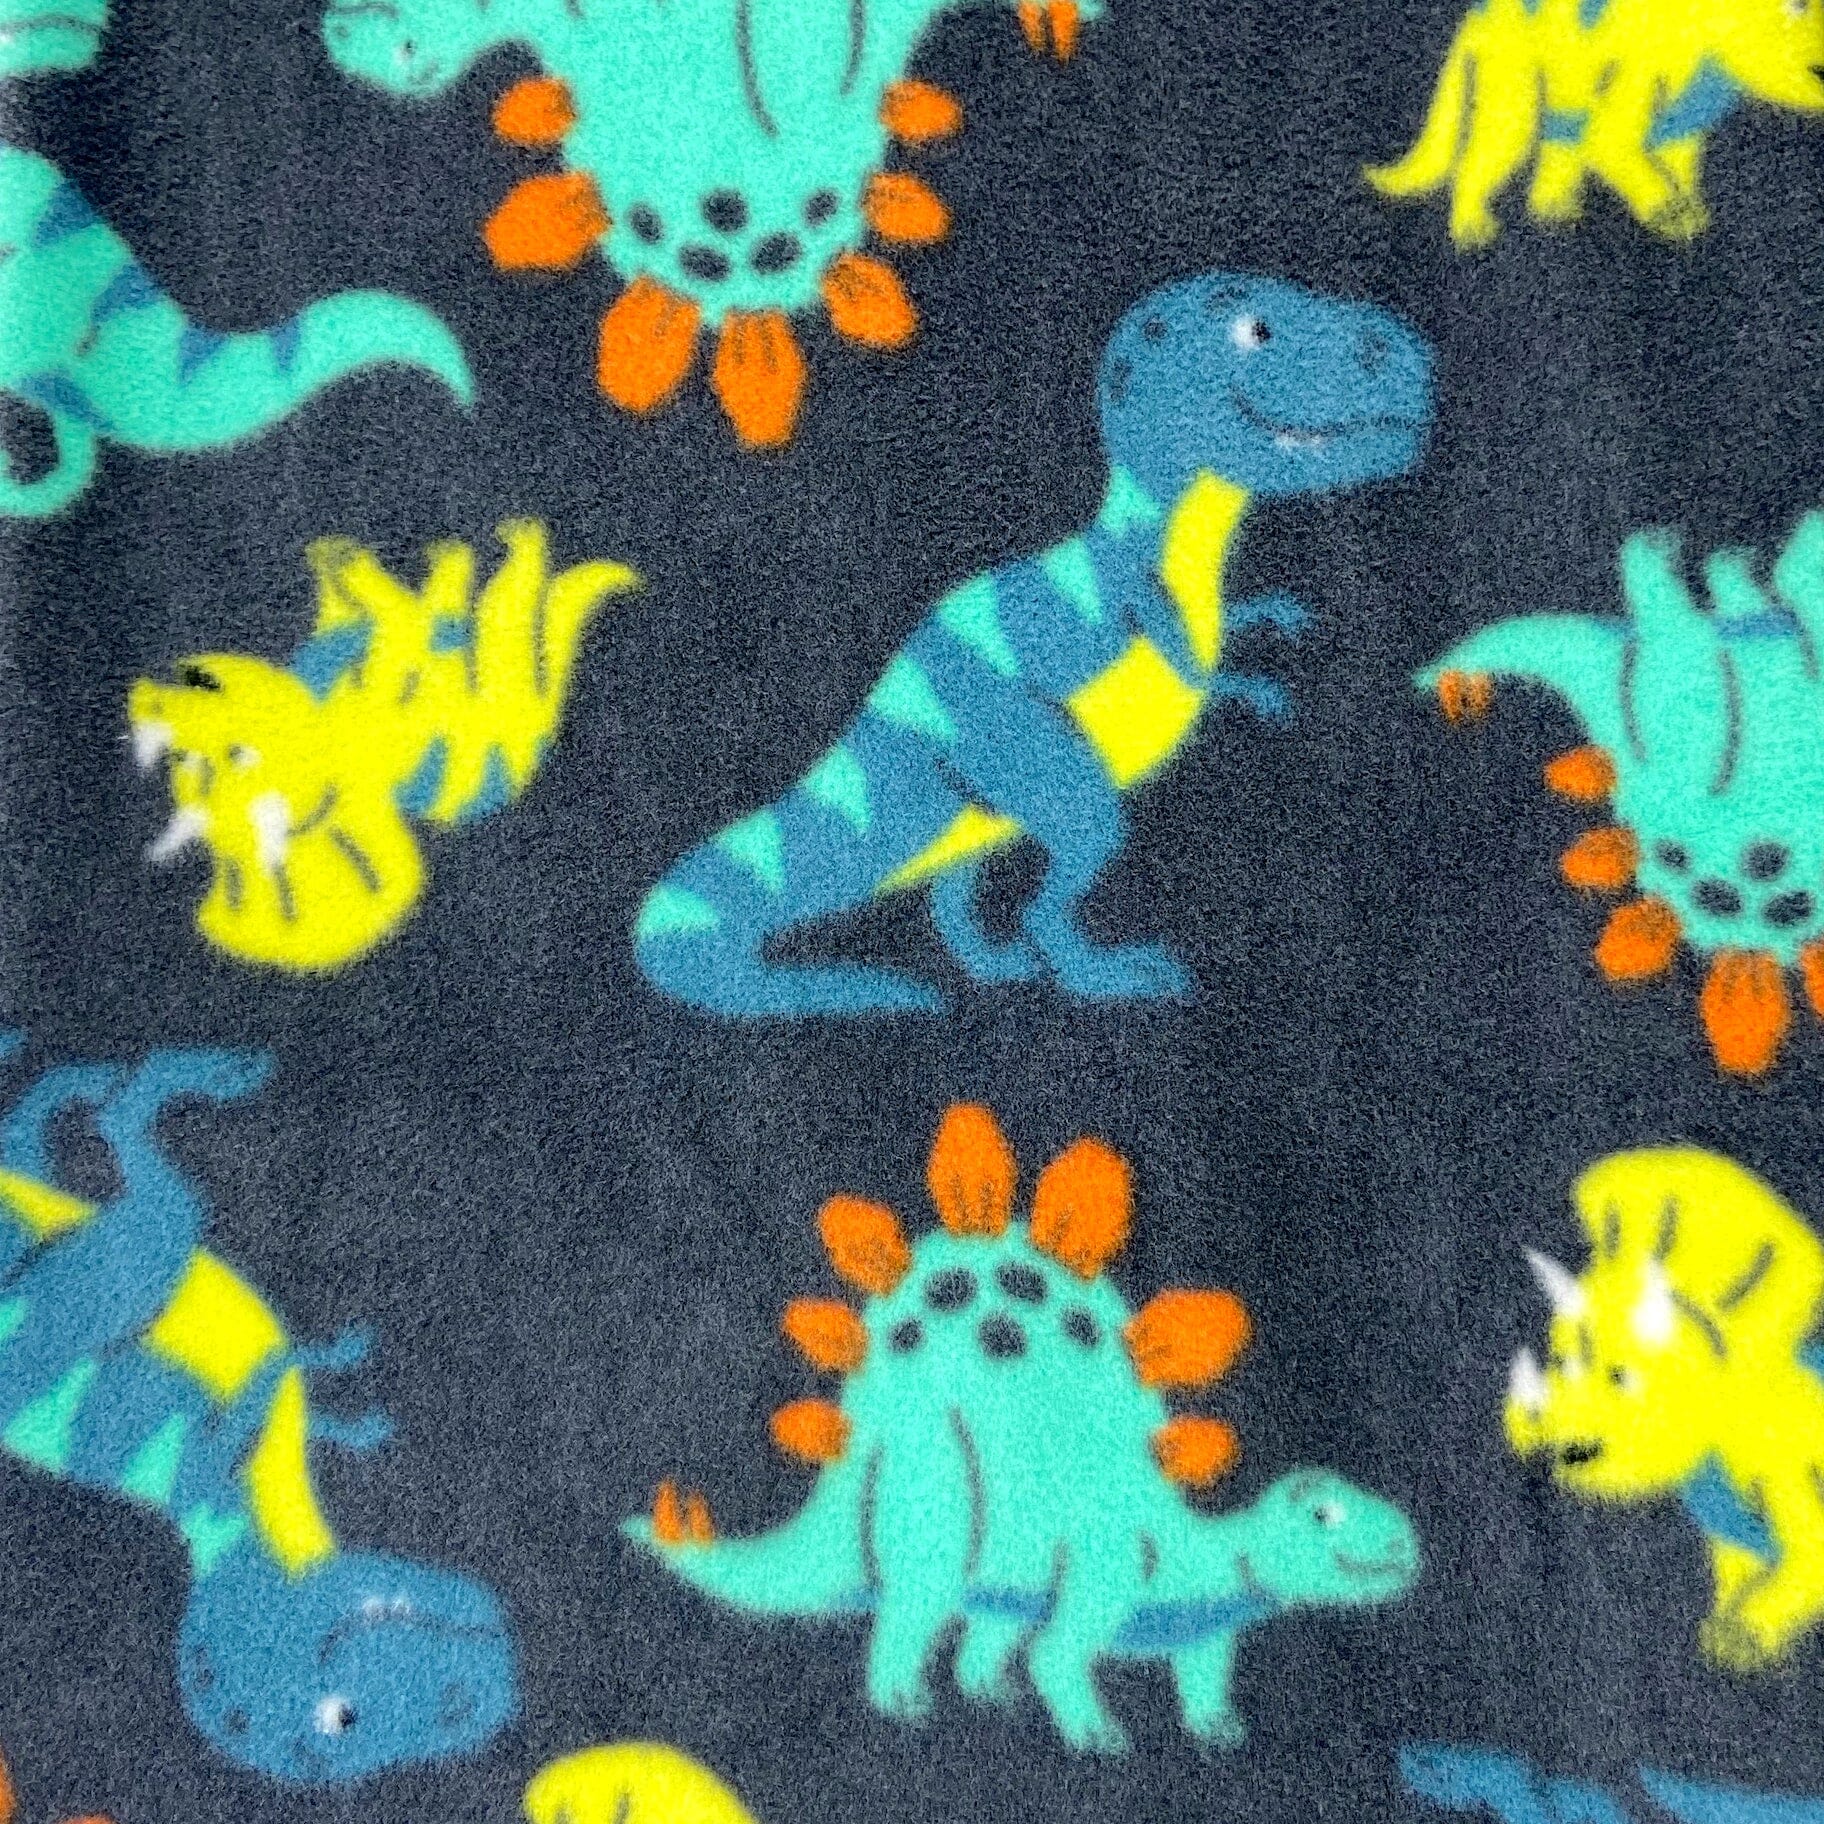 Men's Comfy Sleepwear Dinosaur Novelty Print Soft Fleece Pajama Pants